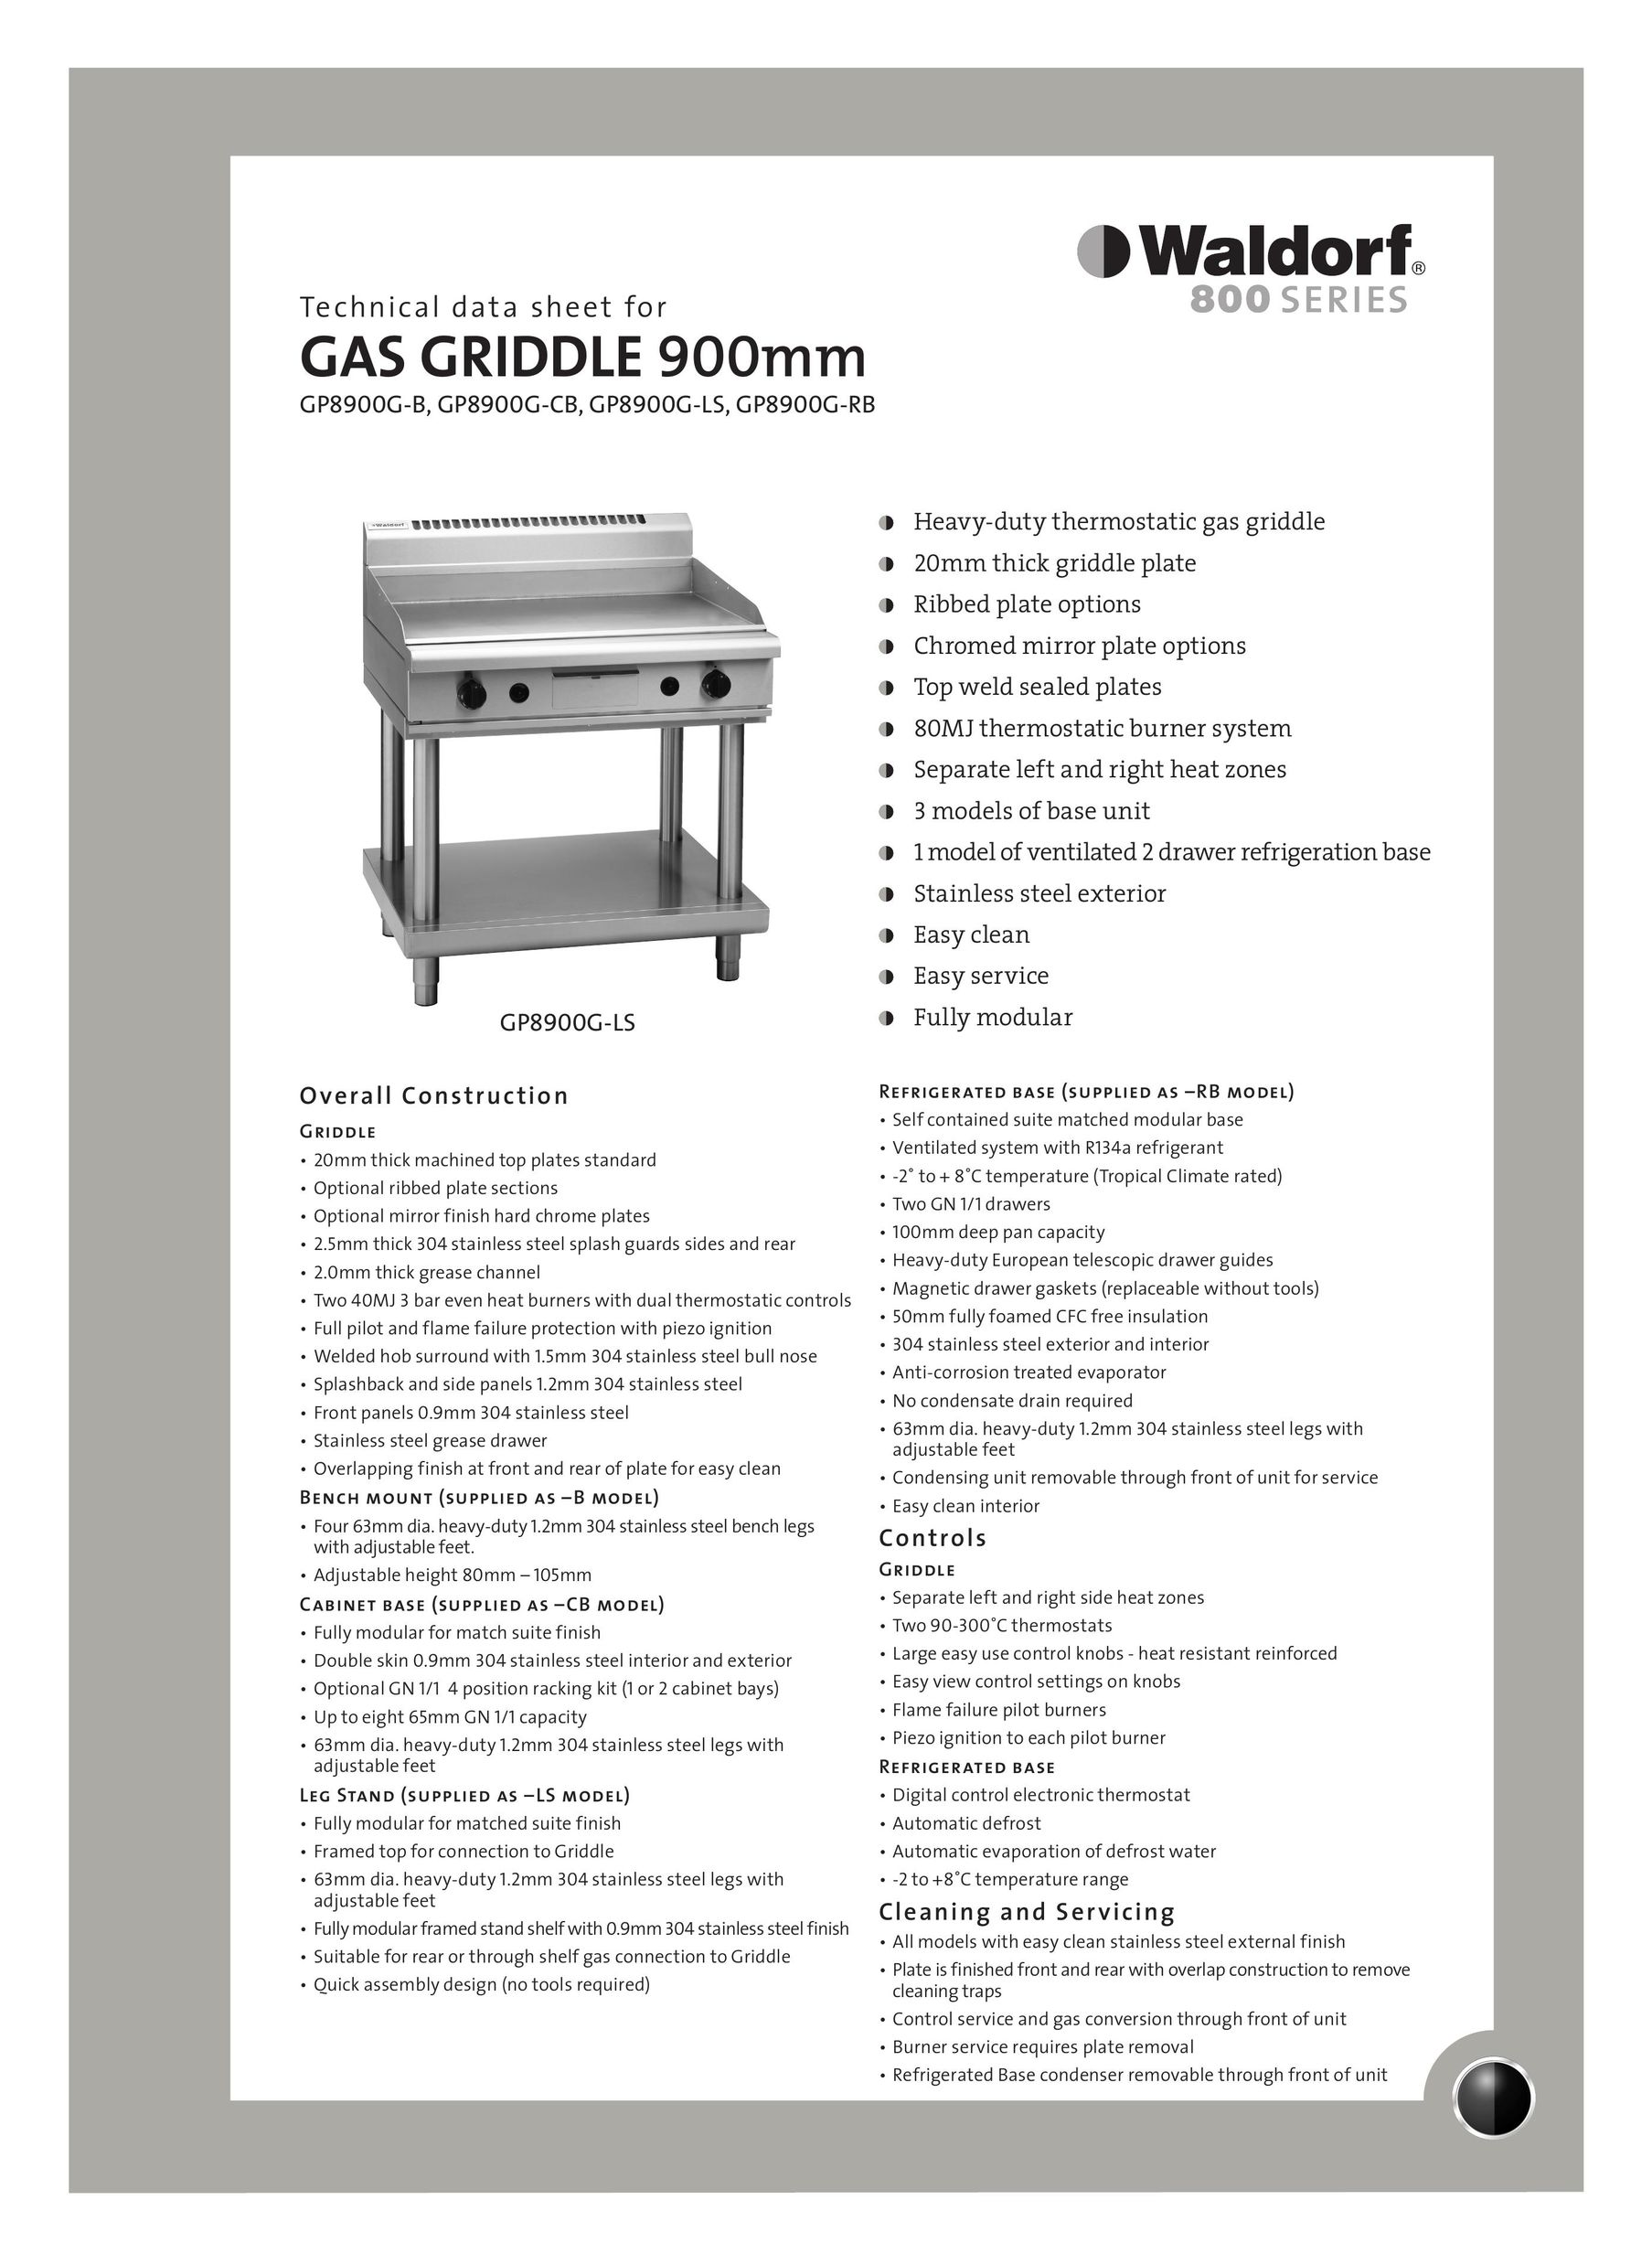 Moffat GP8900G-LS Griddle User Manual